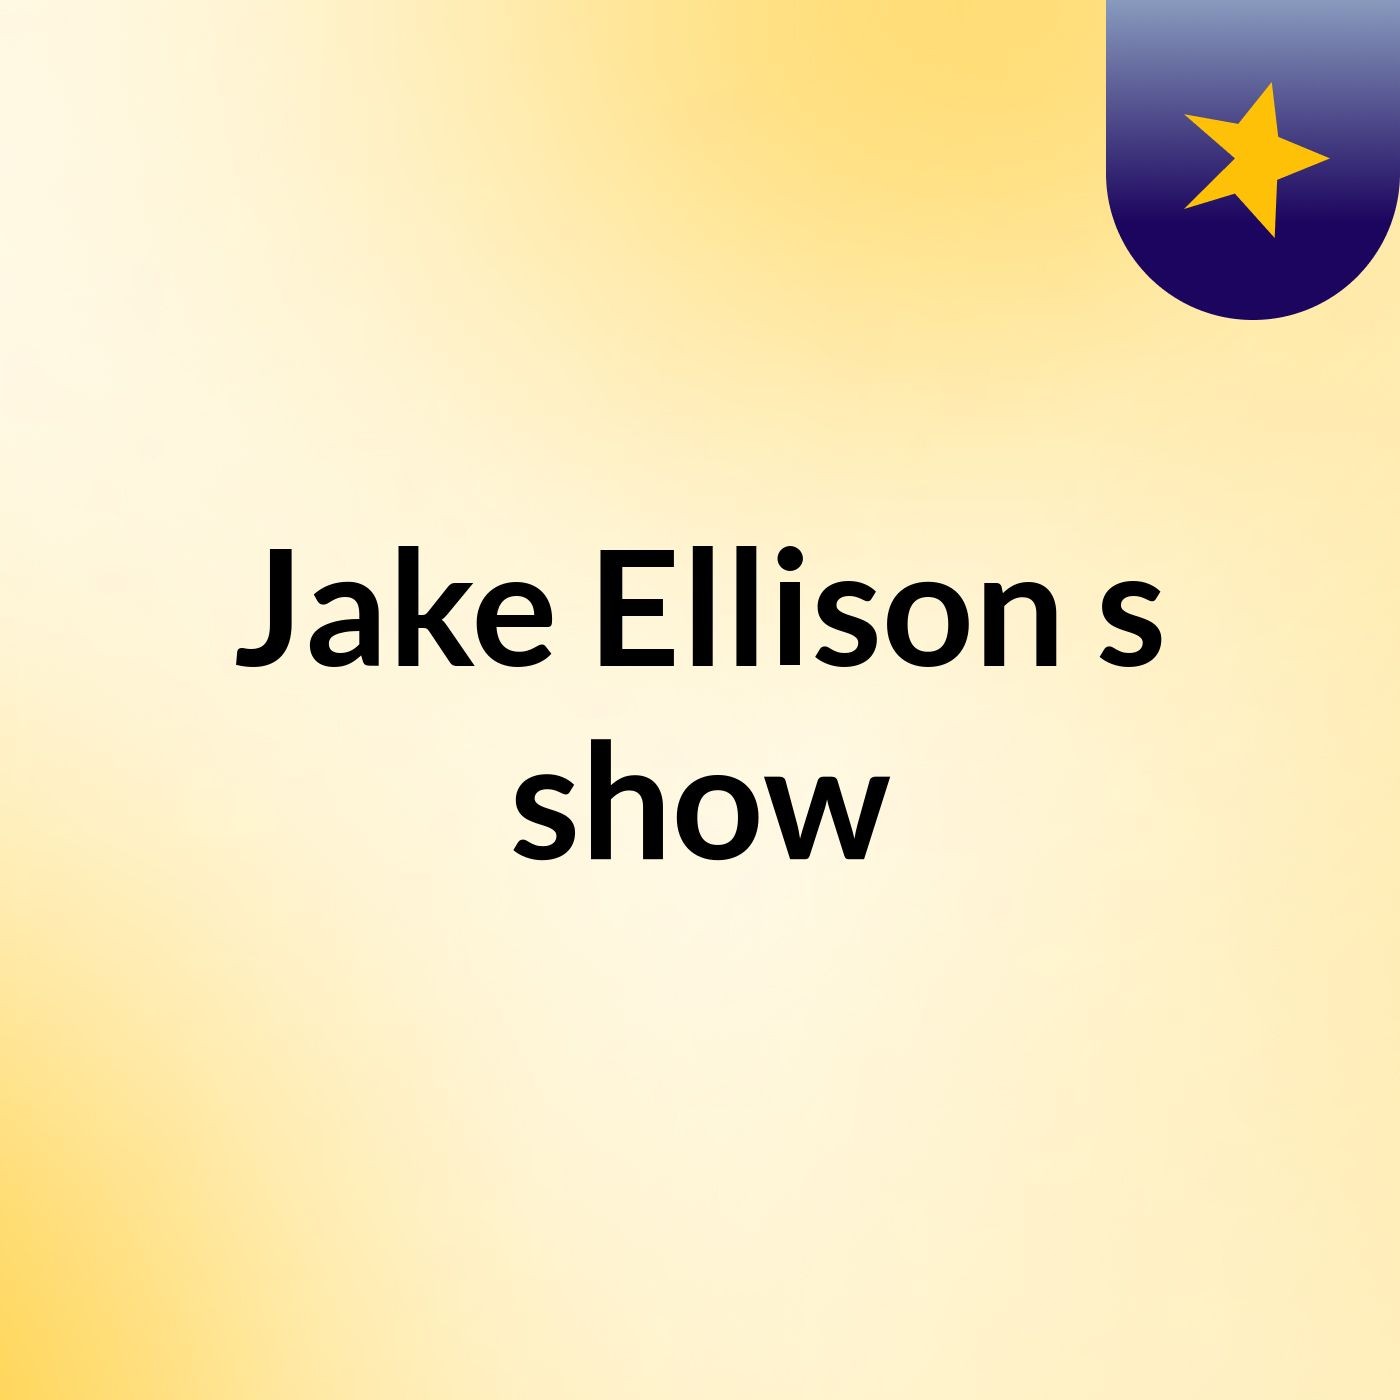 Jake Ellison's show